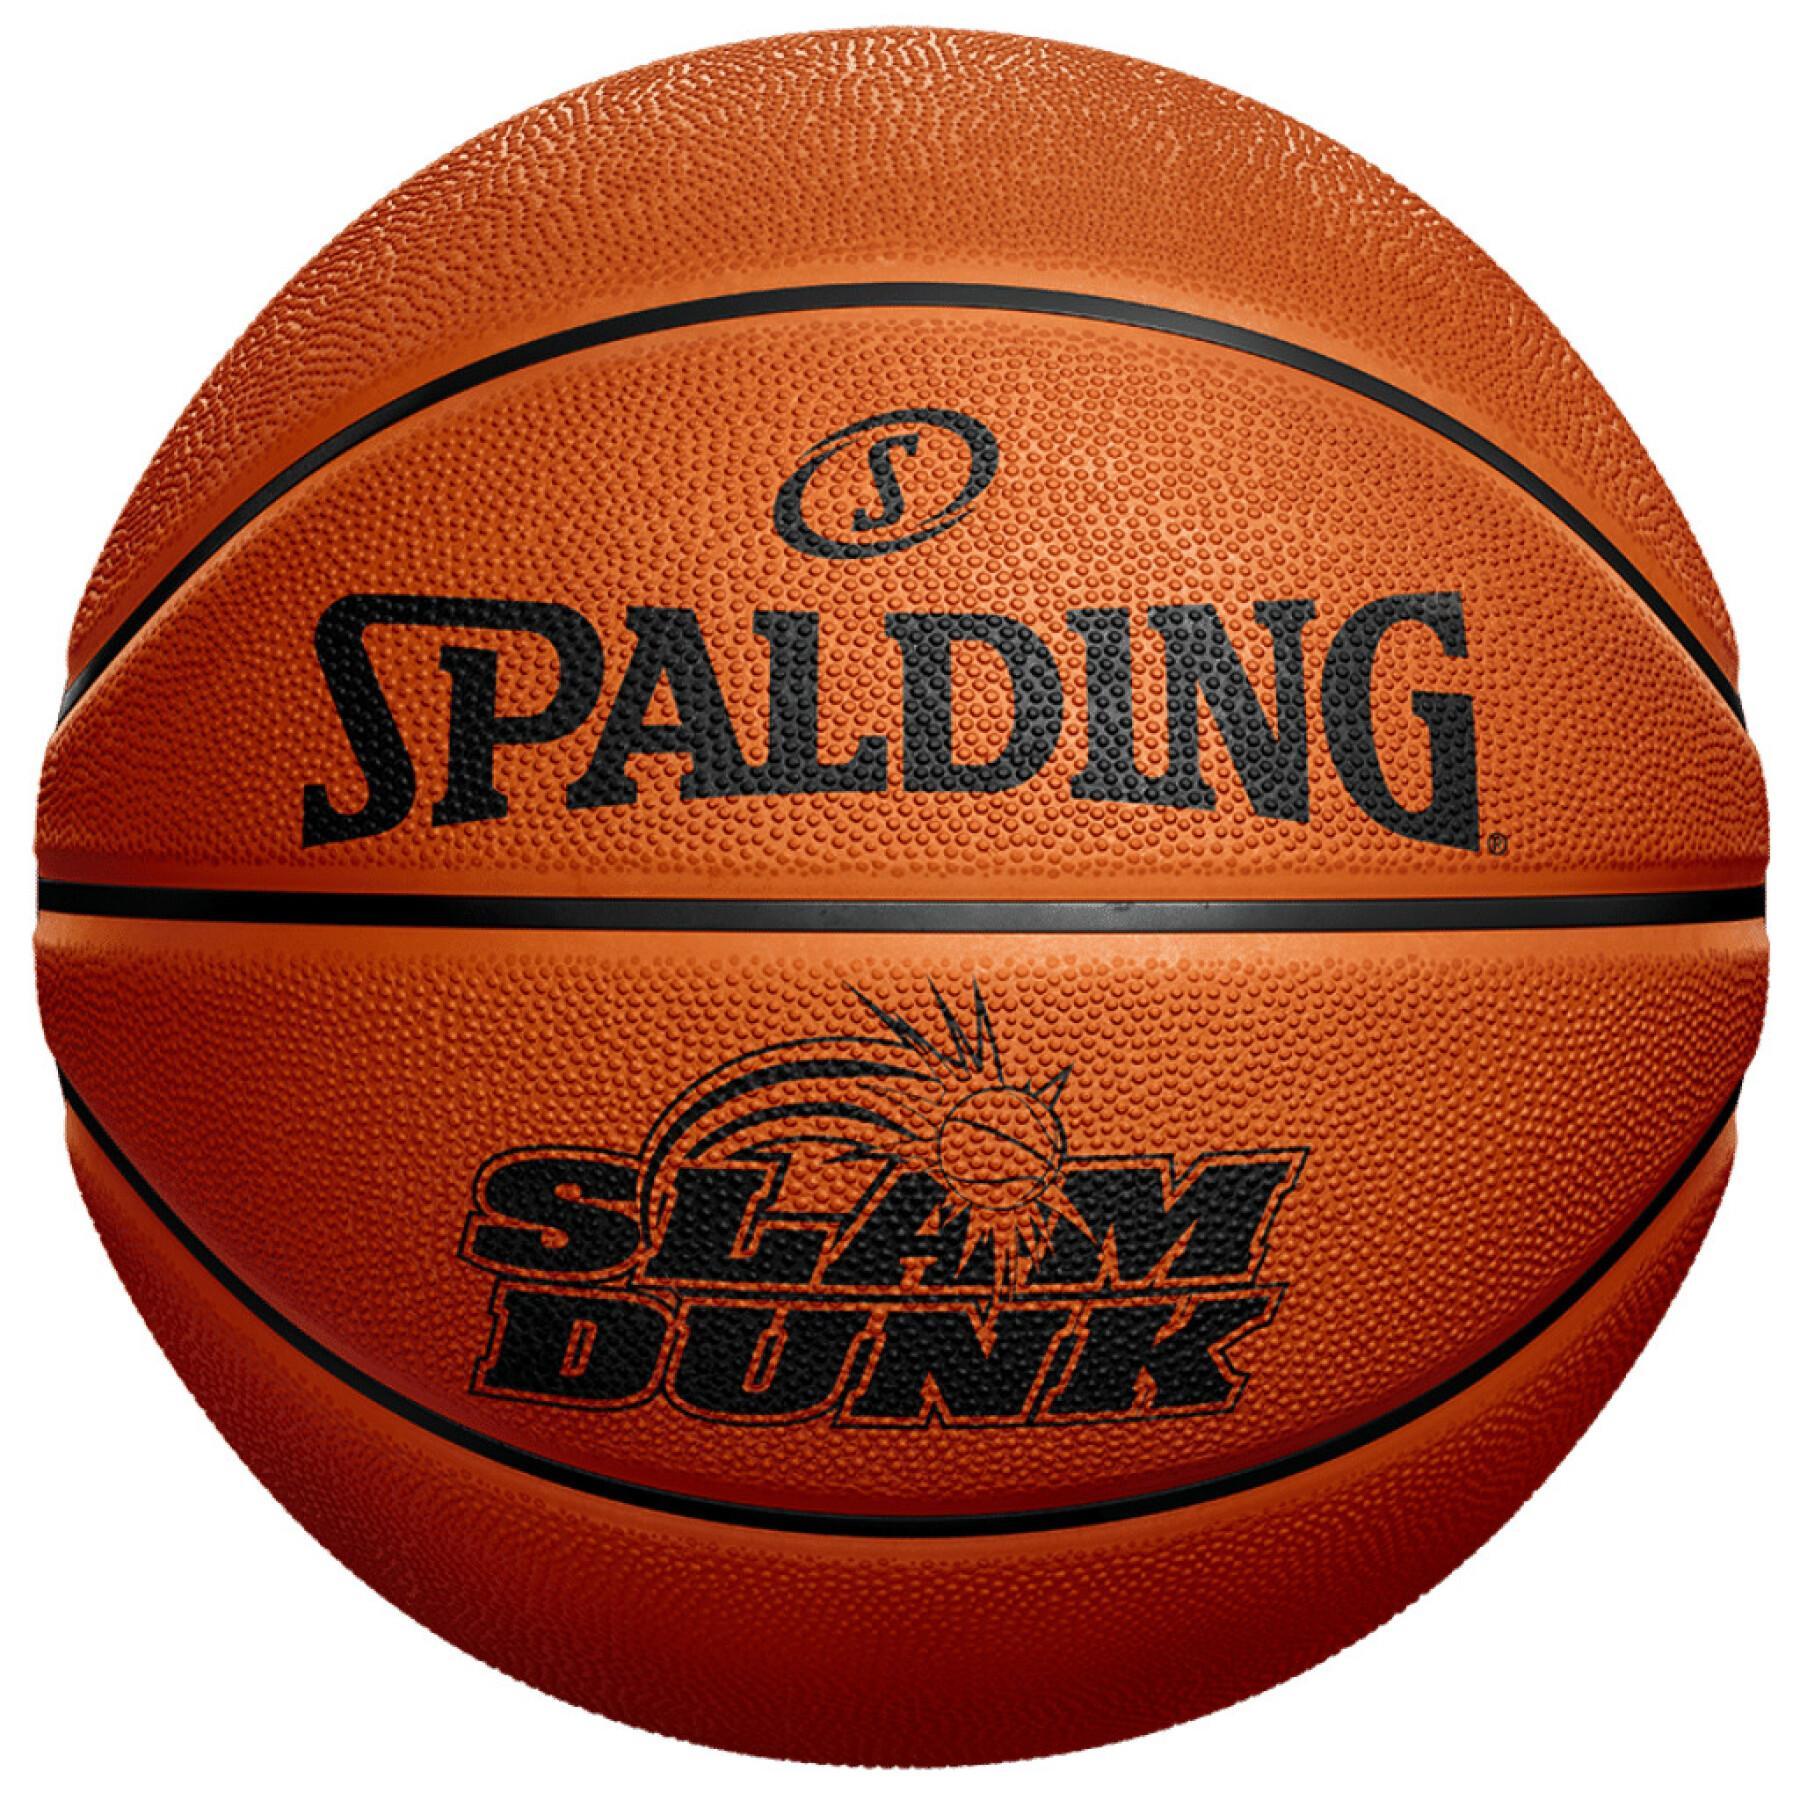 Bal Spalding Slam Dunk Rubber